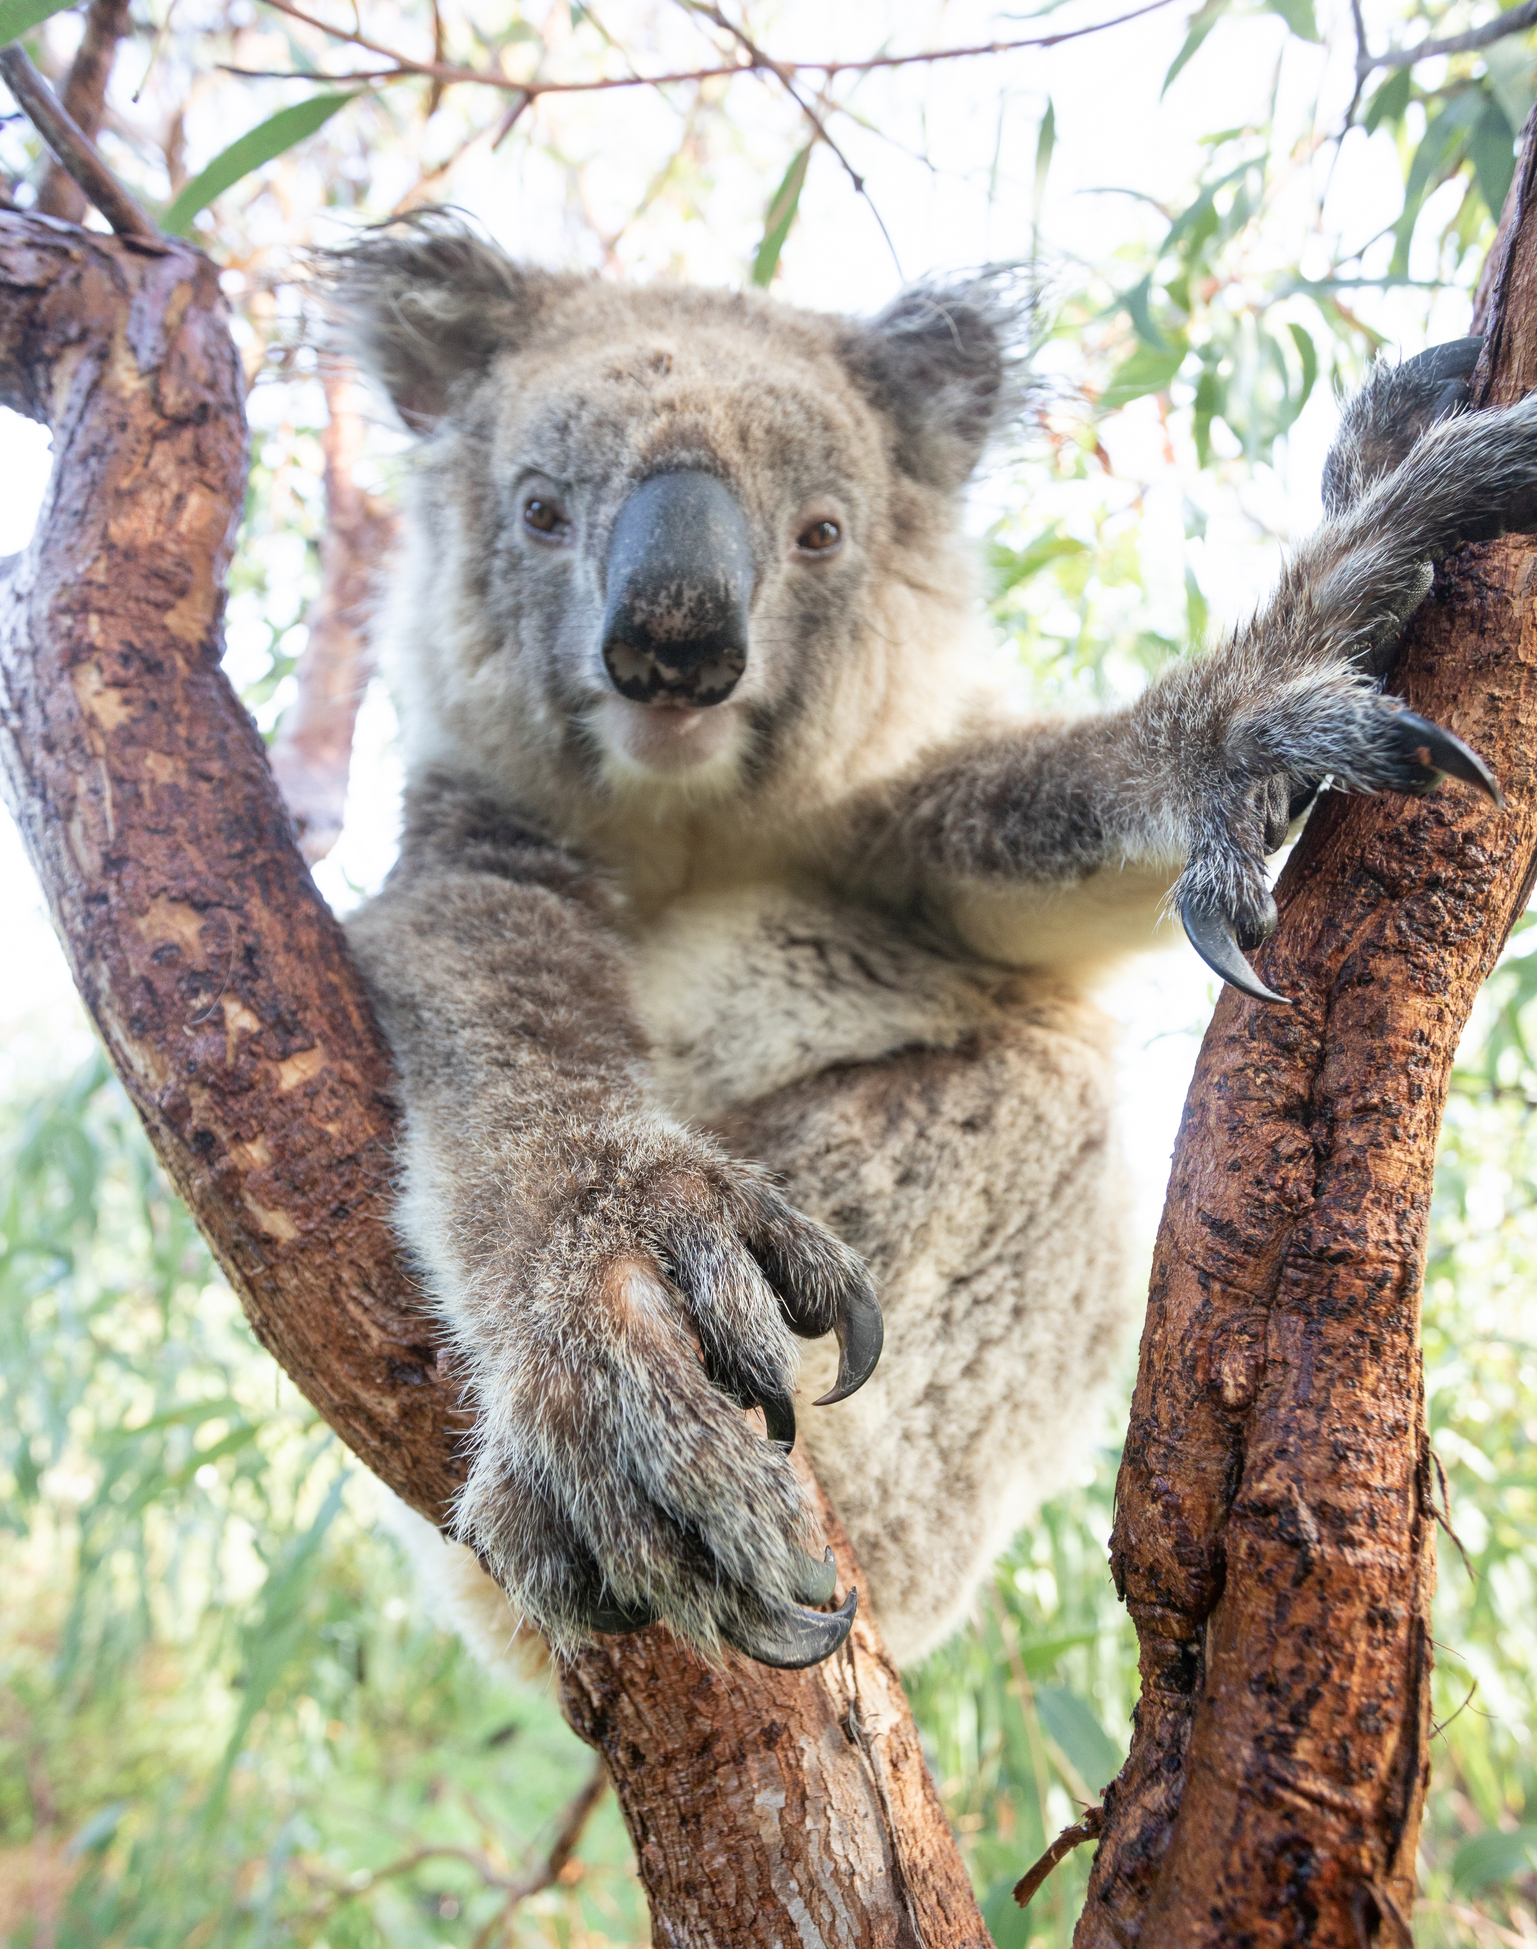 Koala with claws out. Australian Drop Bear from urban myths. Mikkira Koala Sanctuary. Eyre Peninsula. South Australia.